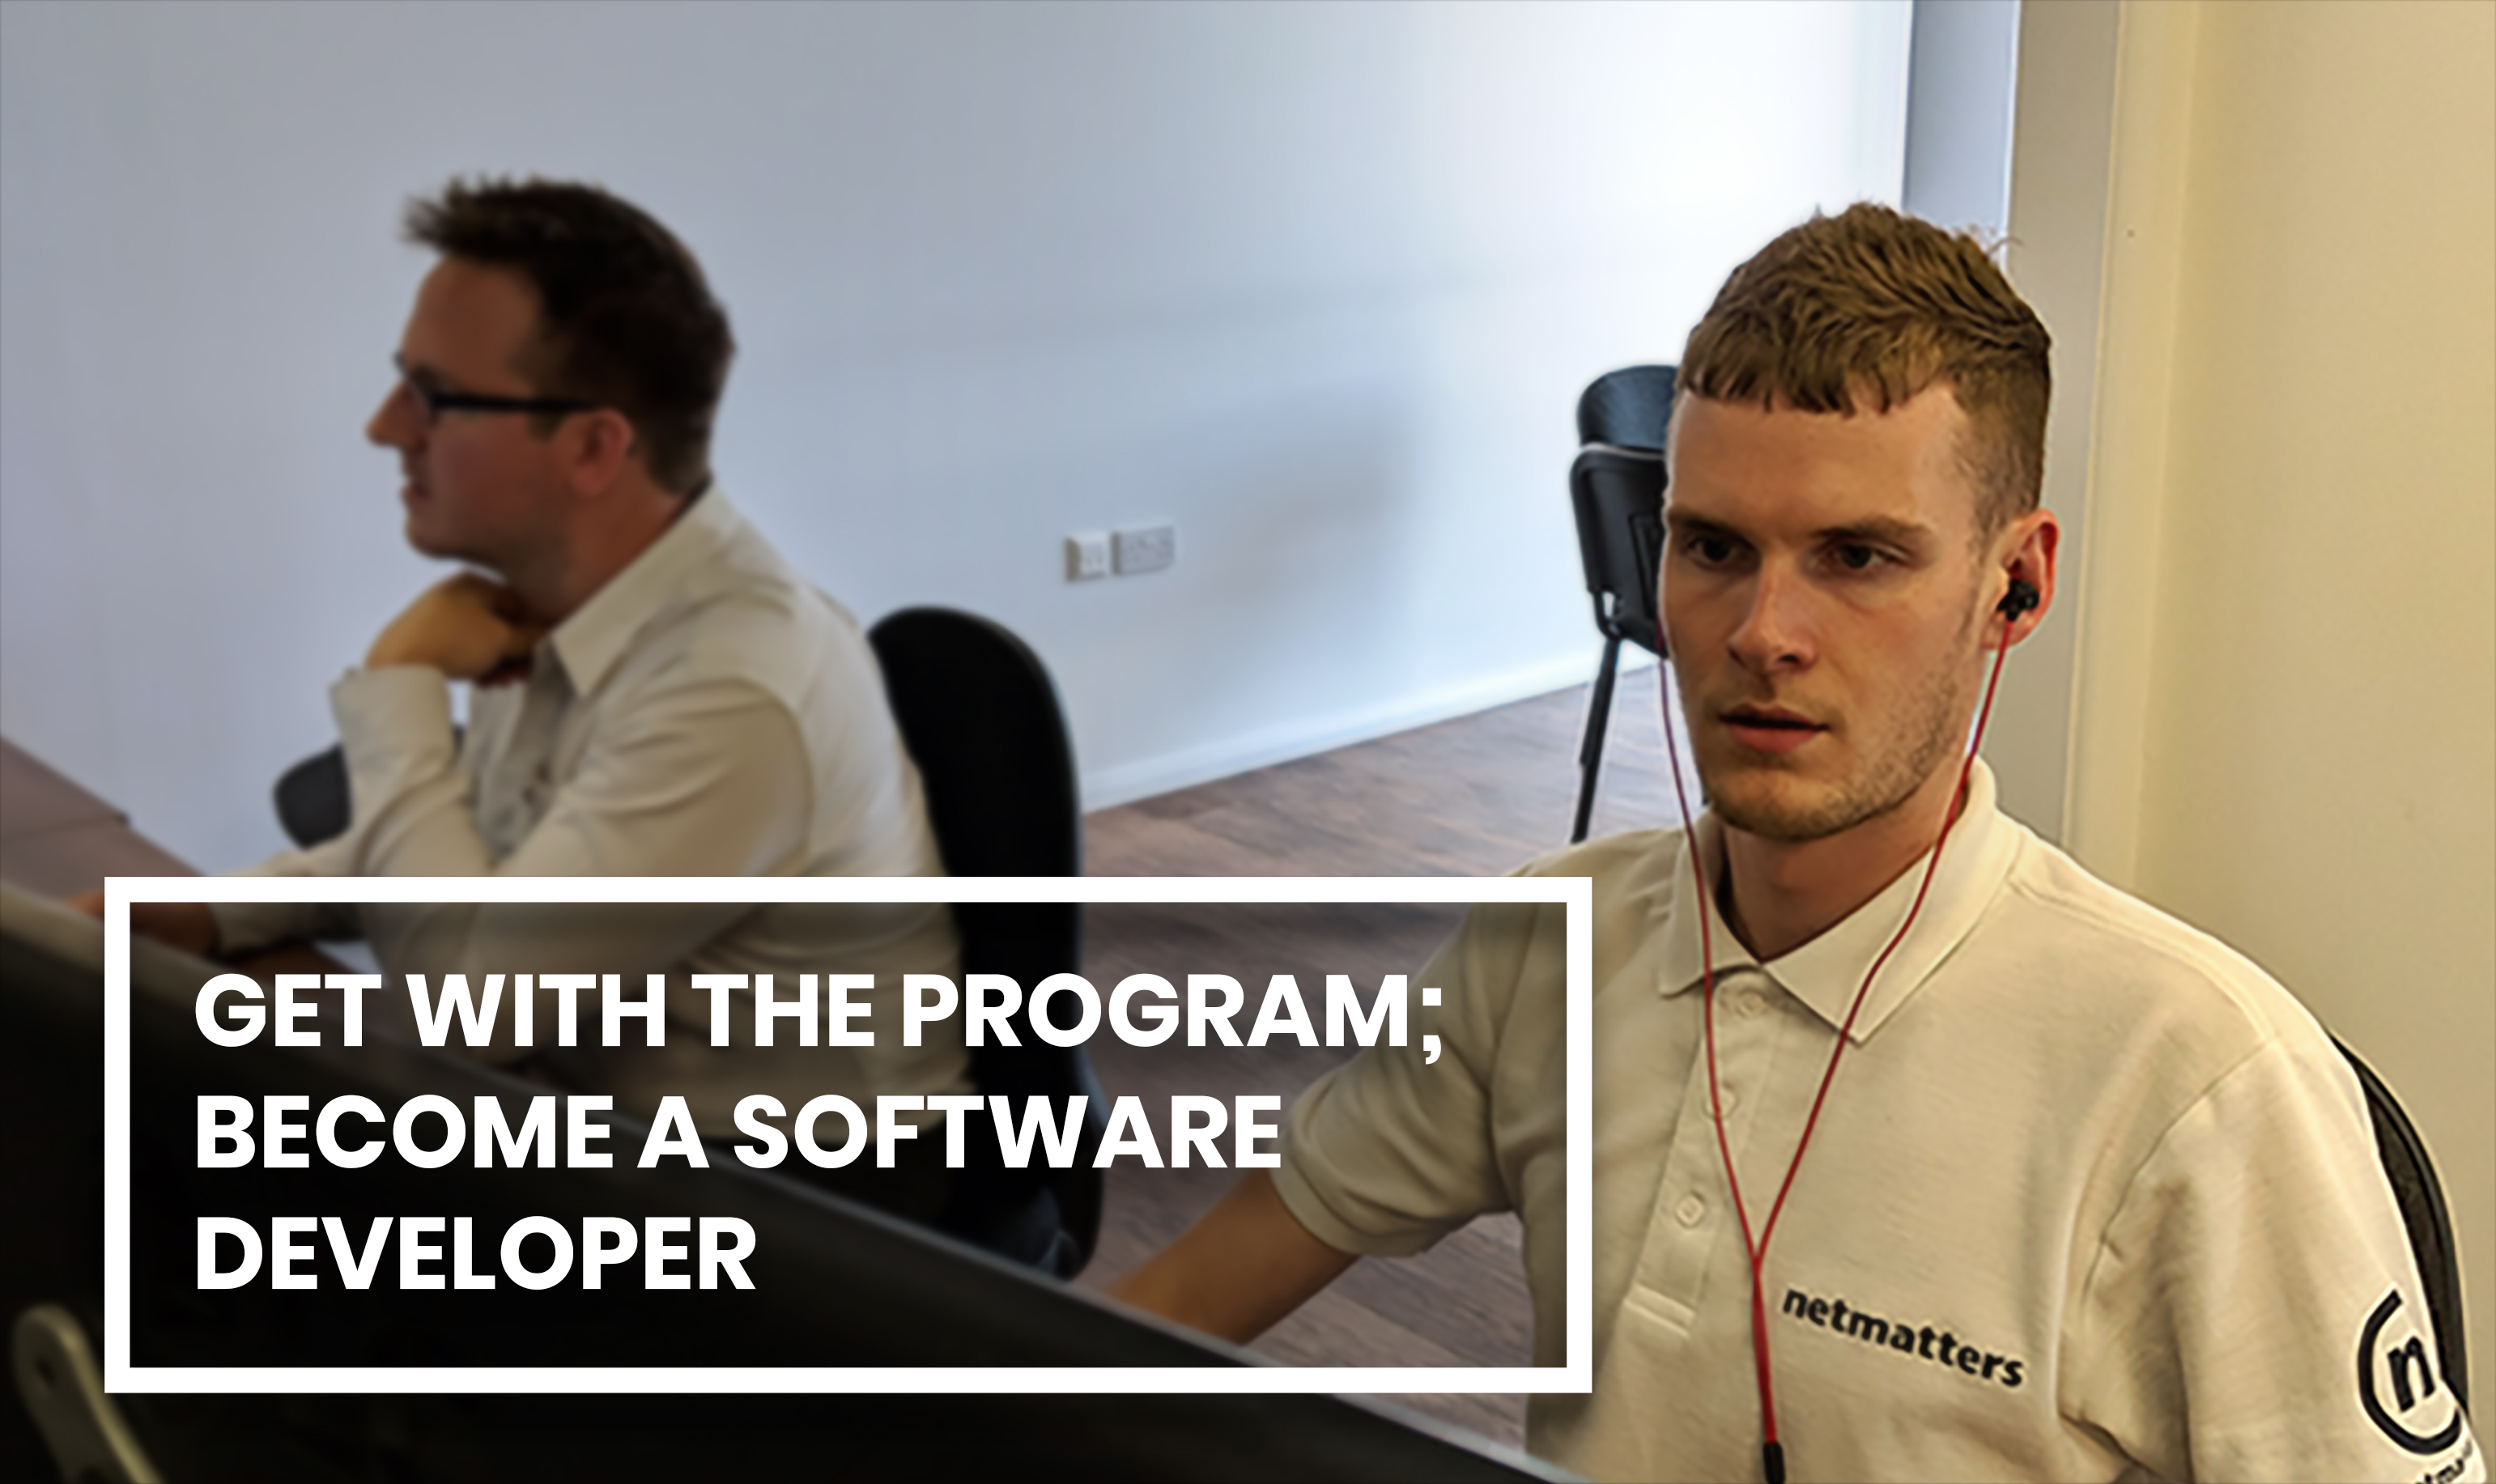 Software developer training at Netmatters